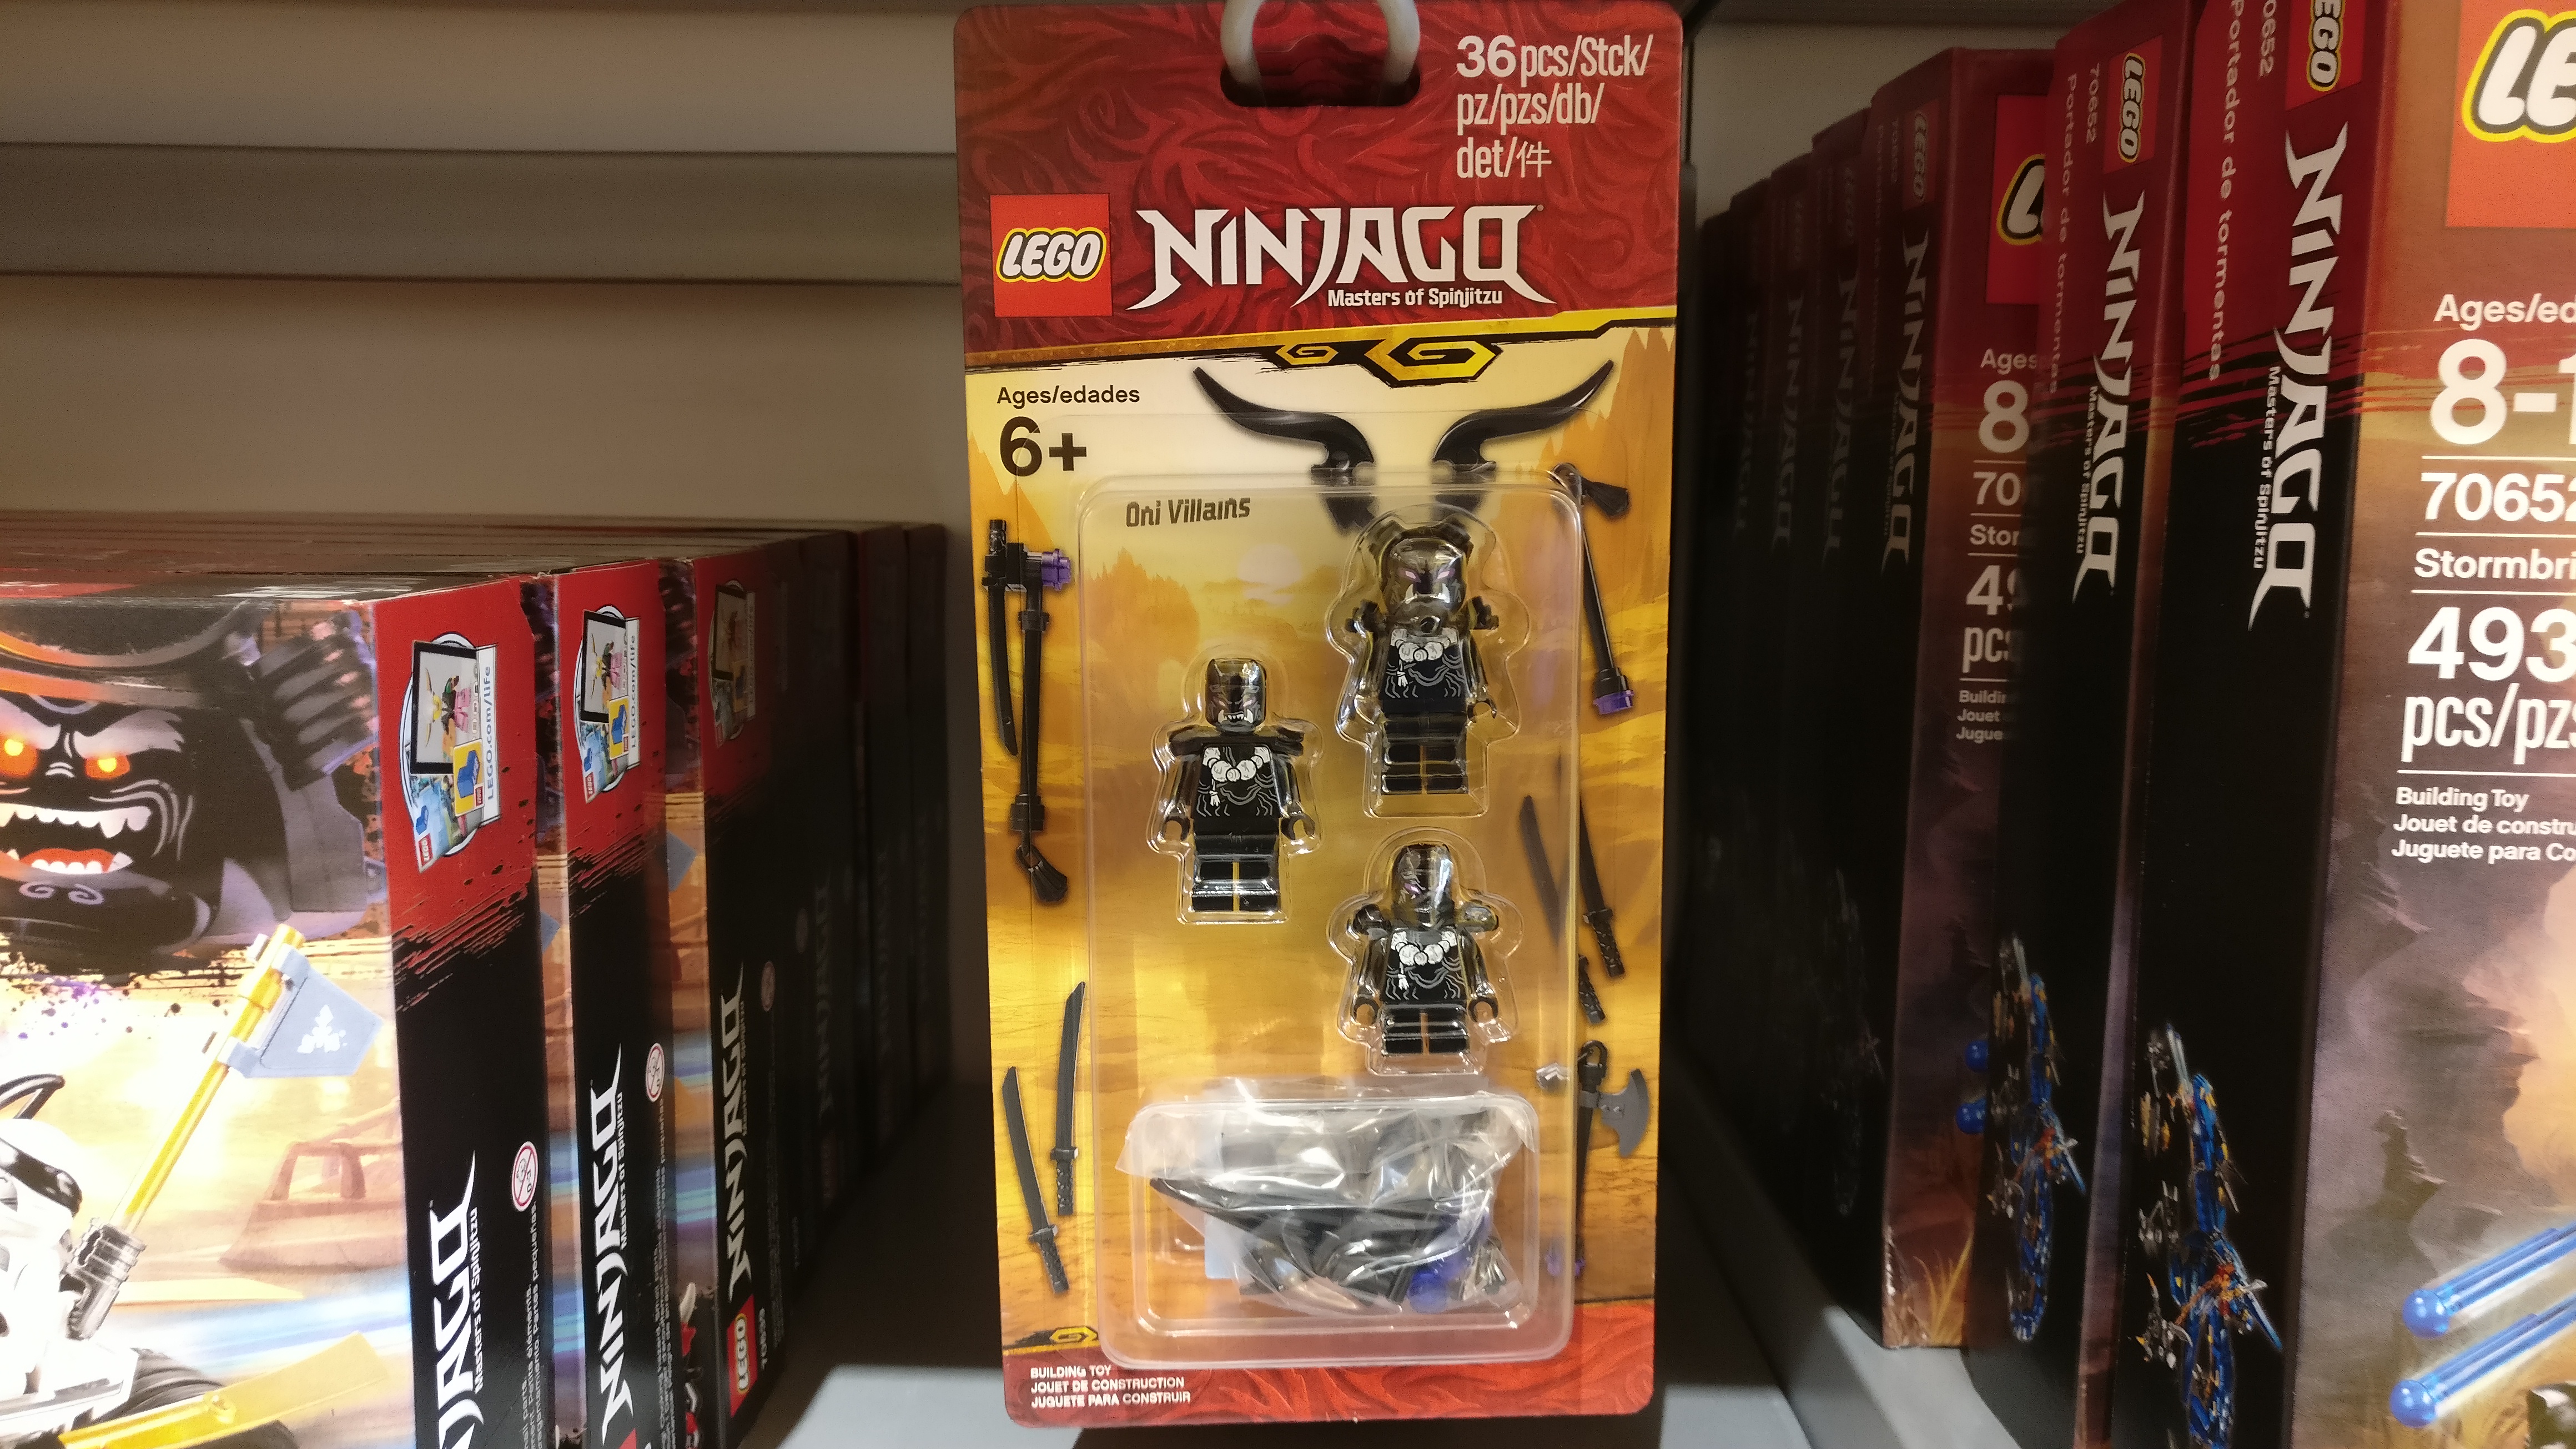 LEGO Ninjago Accessory (853866) Now Available The Fan